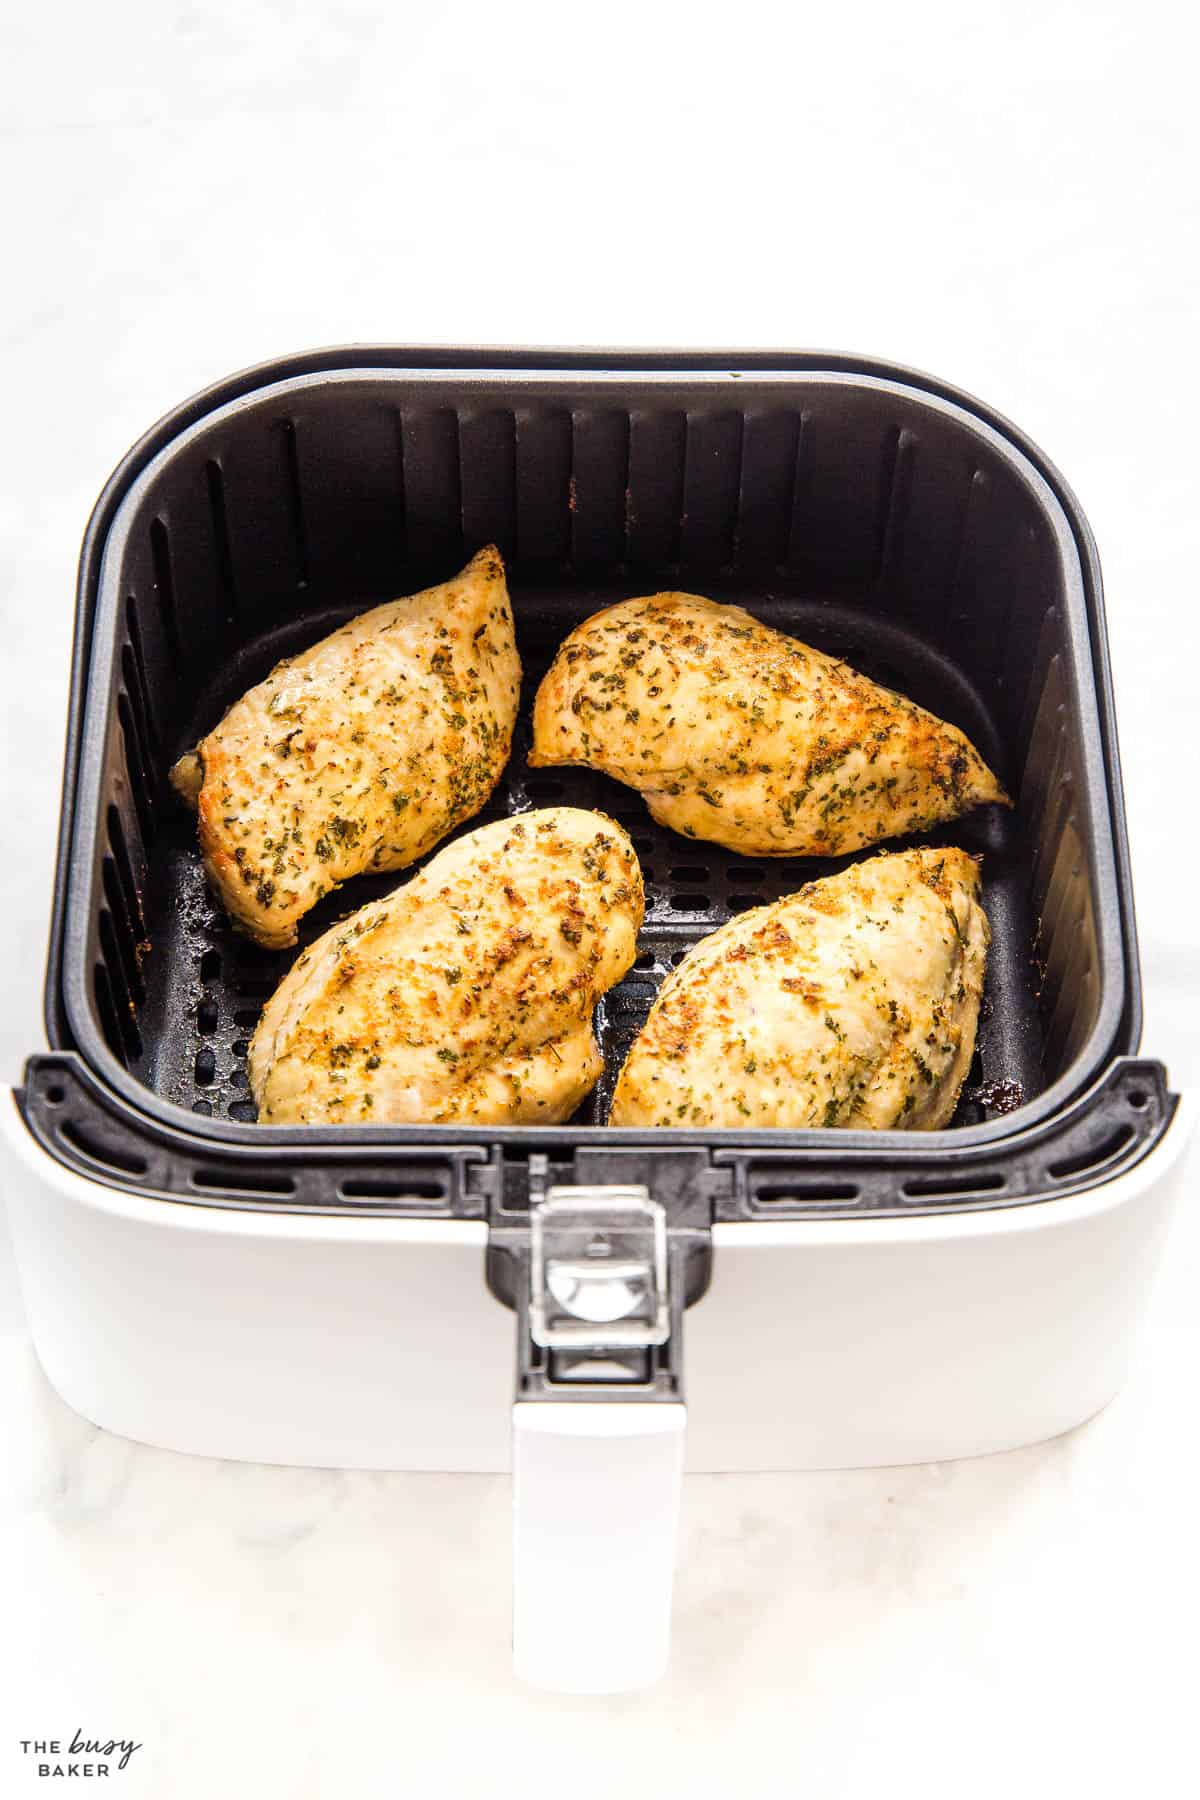 seasoned chicken breasts in air fryer